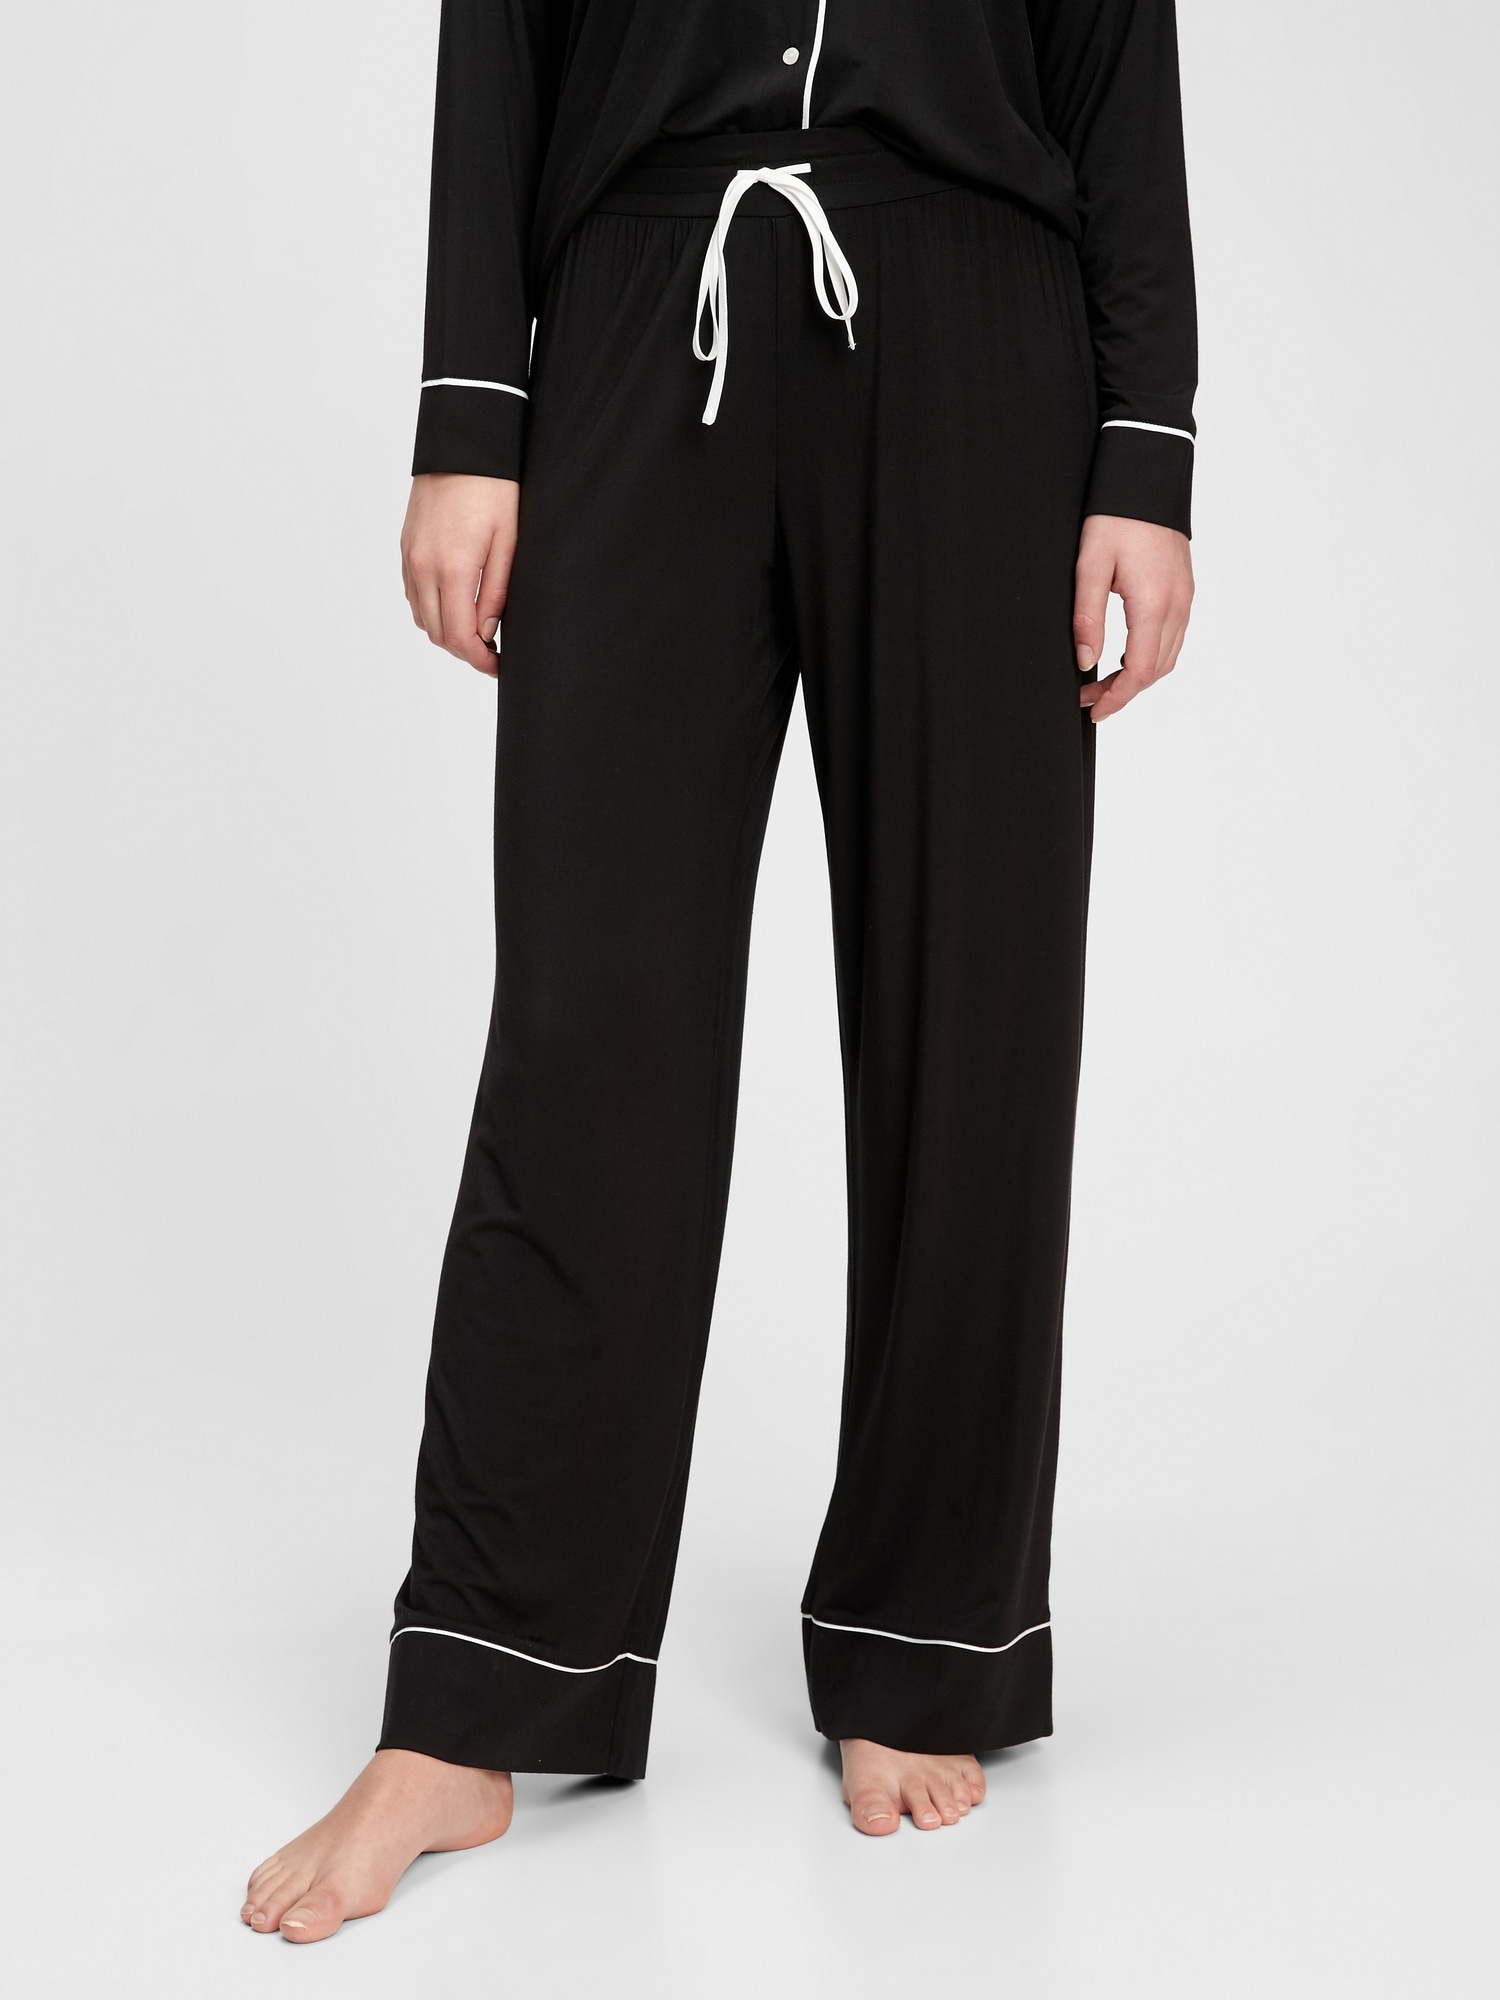 Mon Loungewear Classic Basic Style Black Modal Pajamas Set –